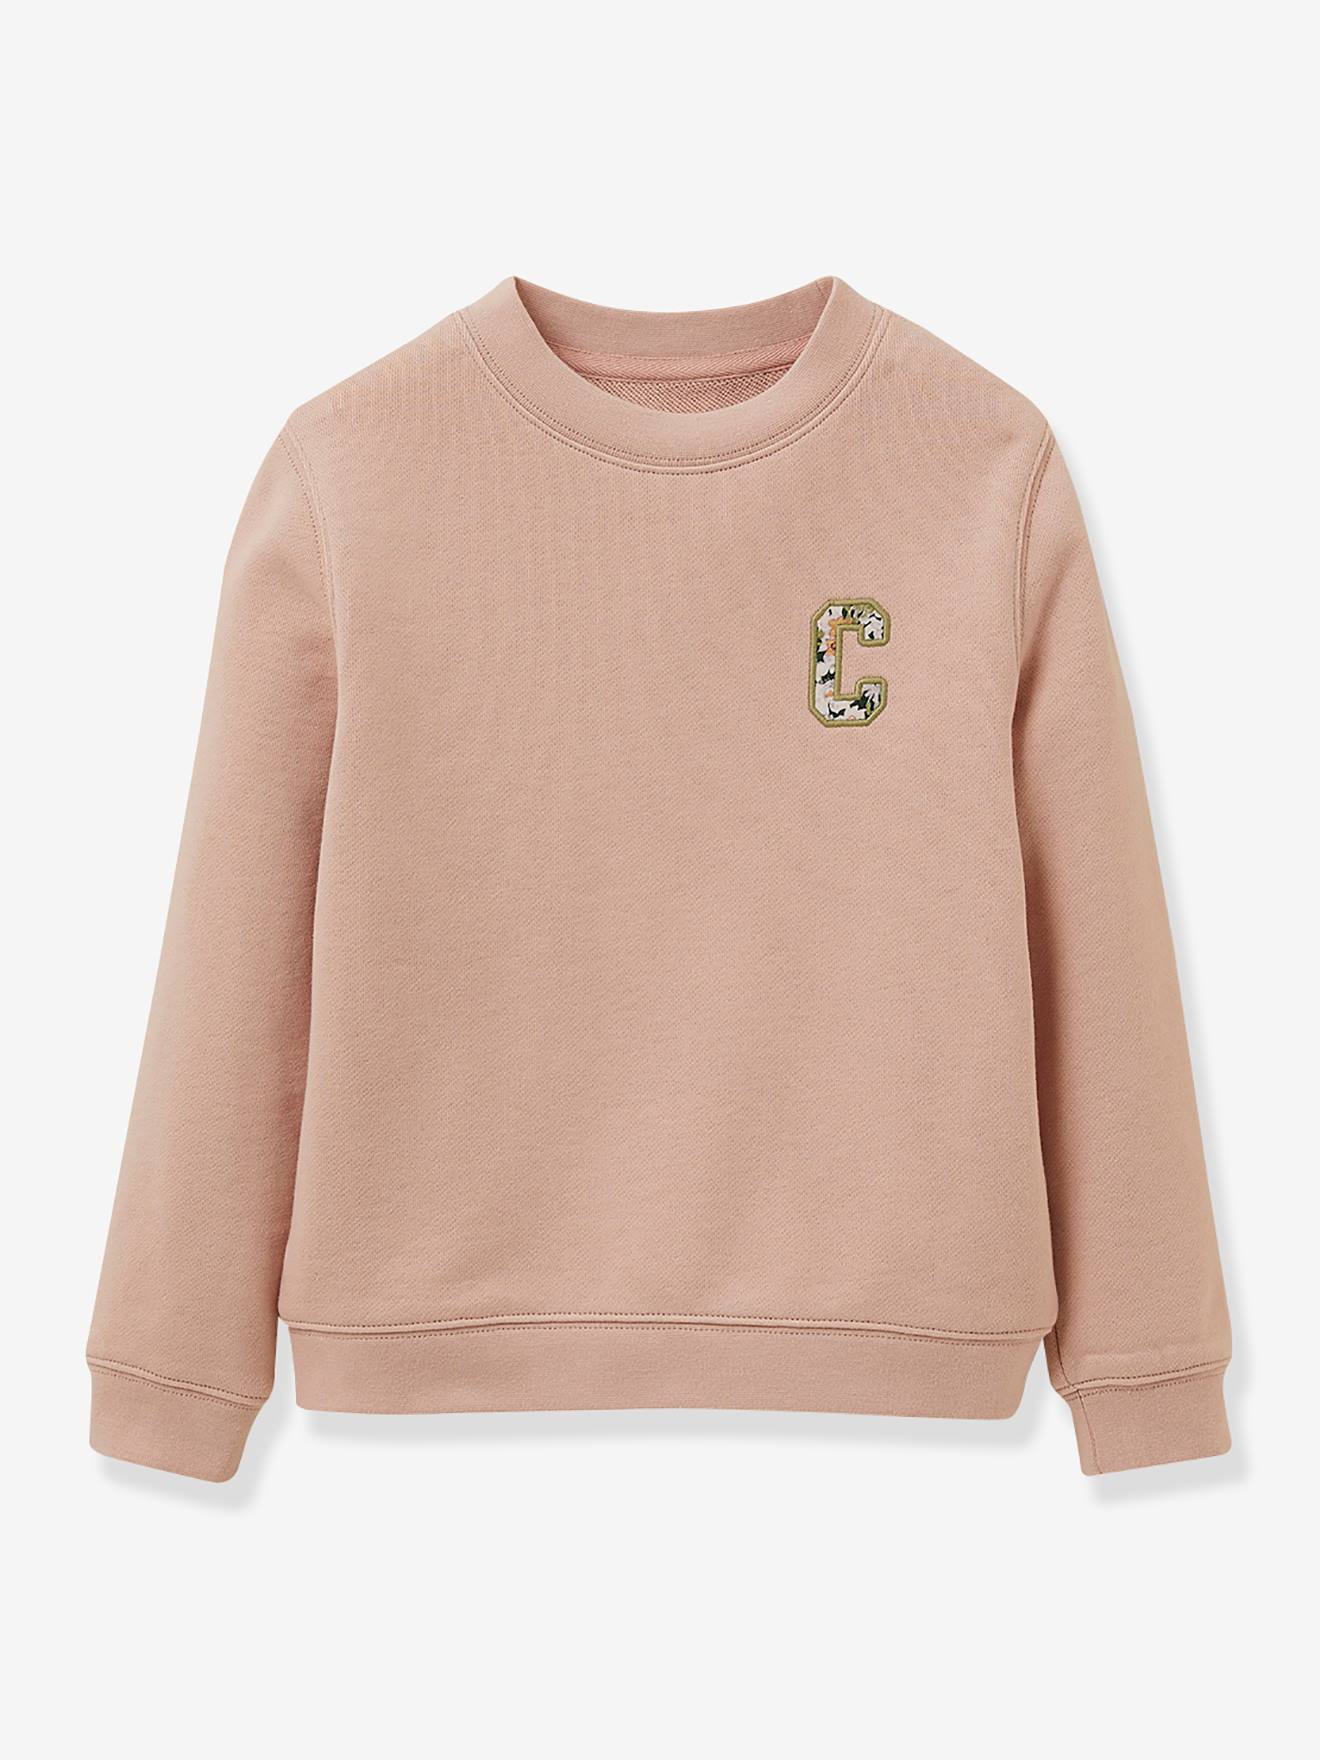 Meisjessweater met borduursel Libertystof - biokatoen - CYRILLUS rozen